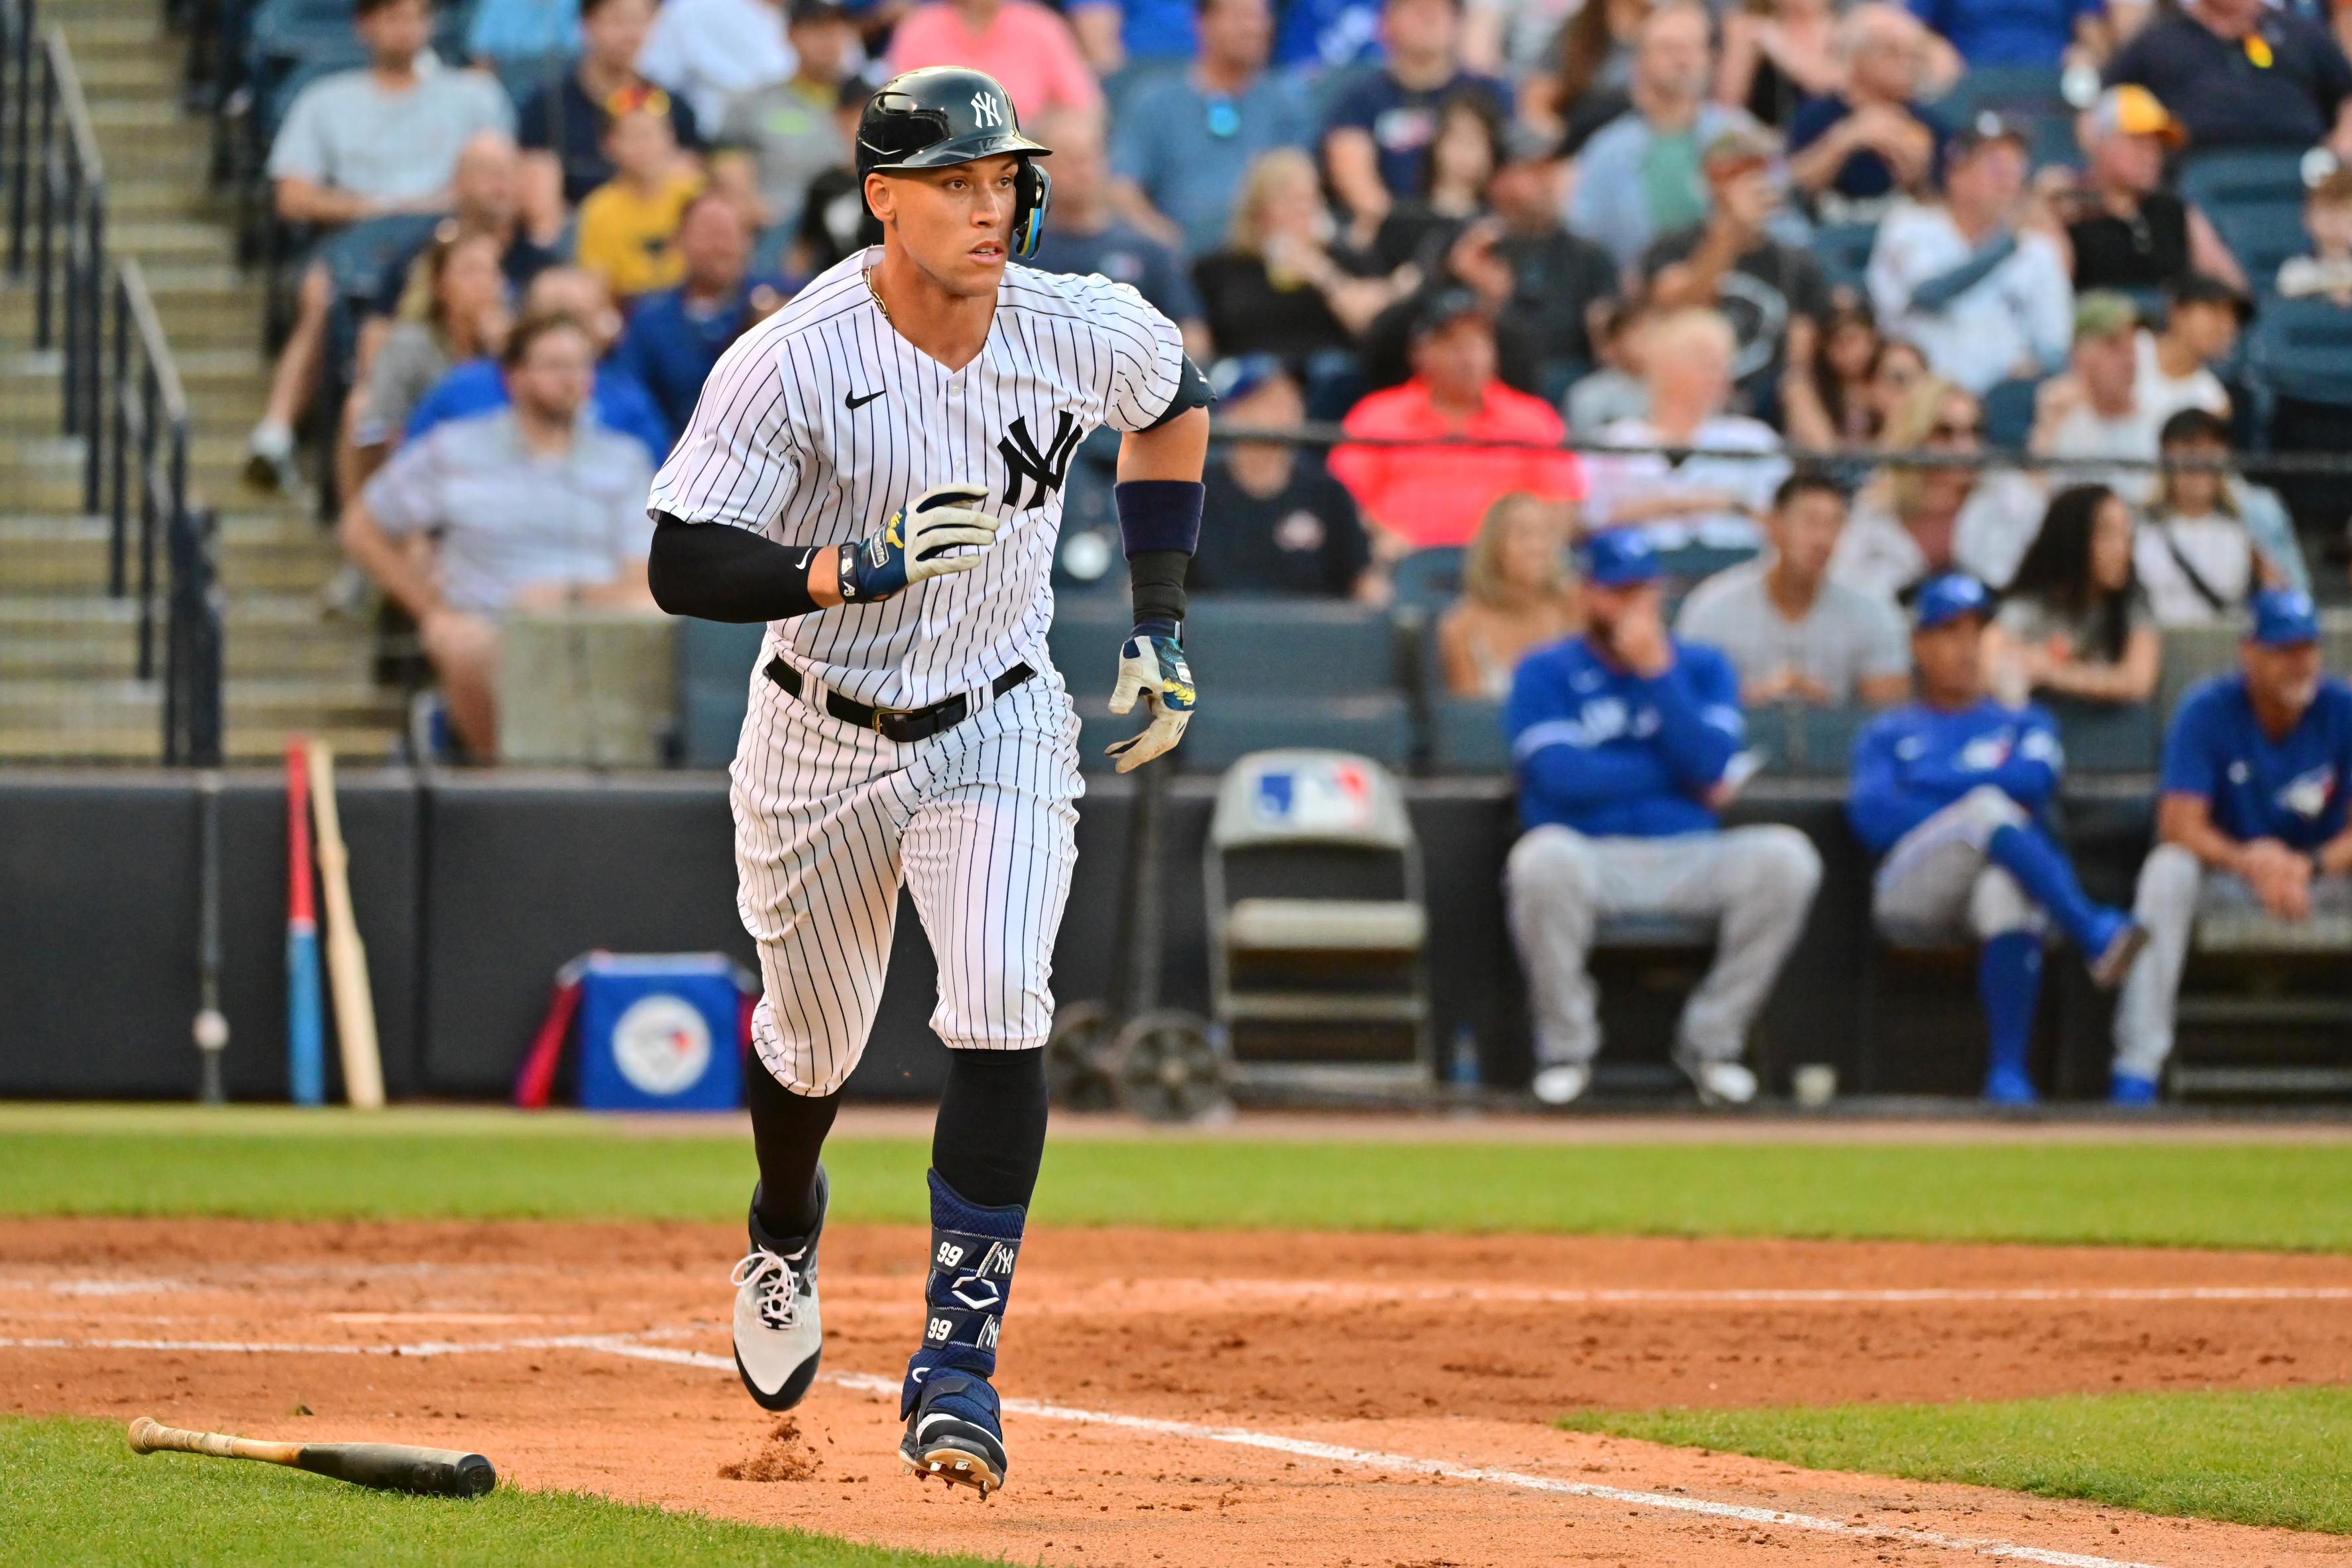 Season's biggest trial awaits Aaron Judge, faltering Yankees